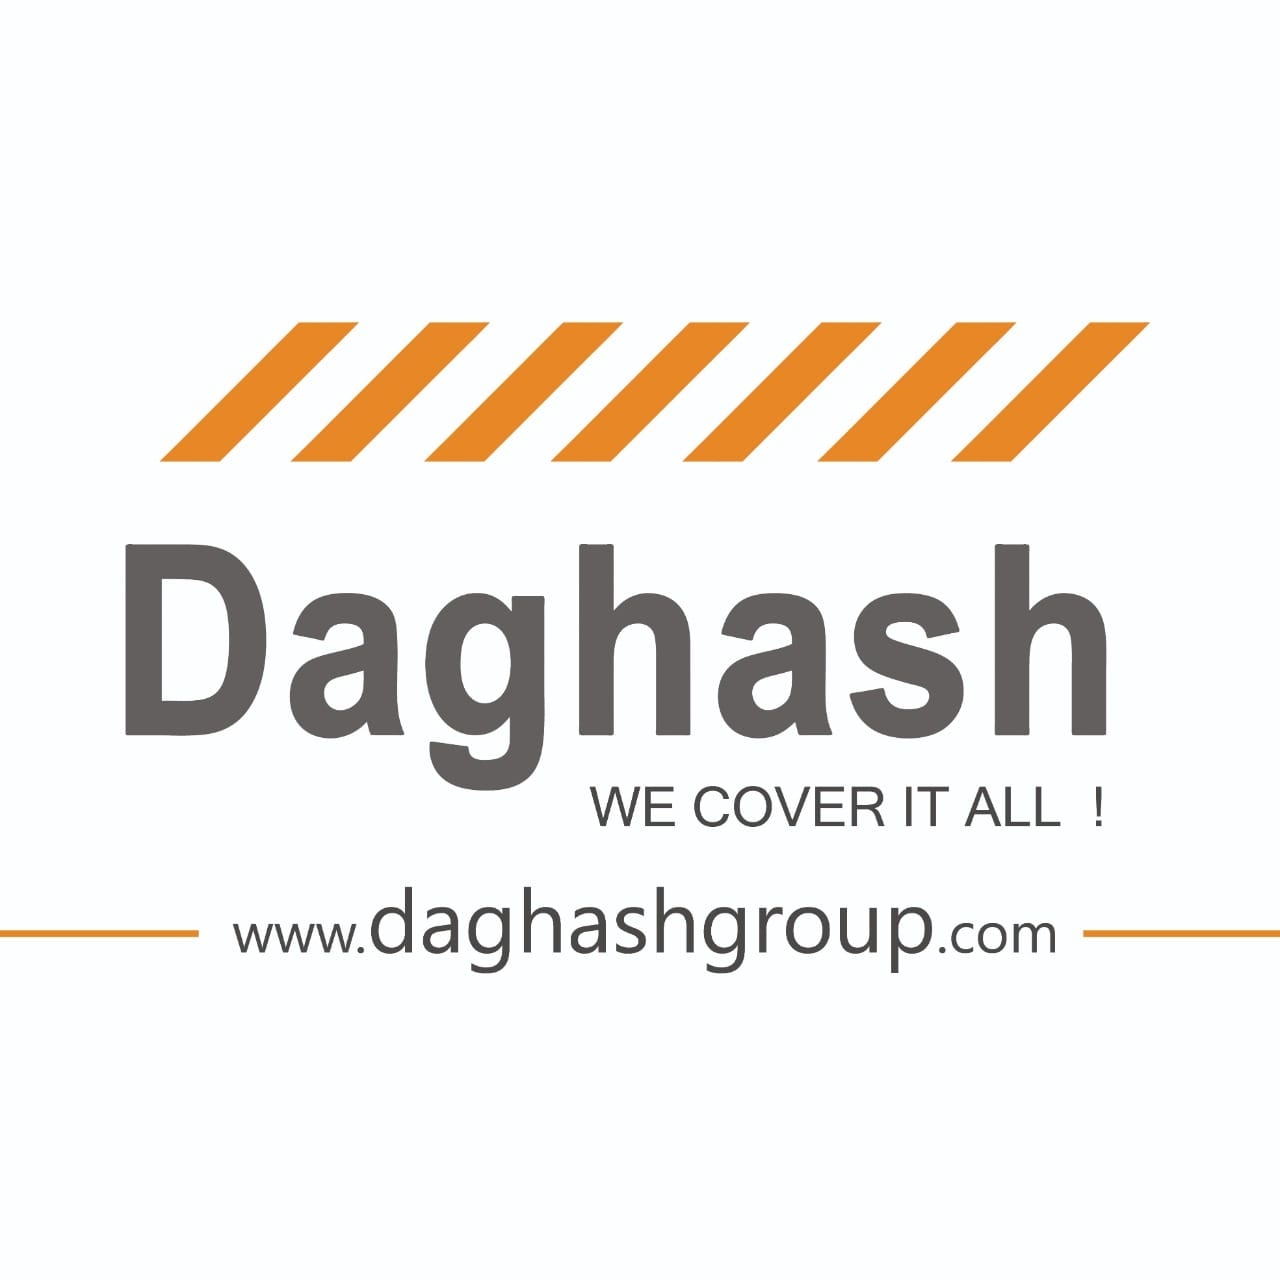 Daghash group